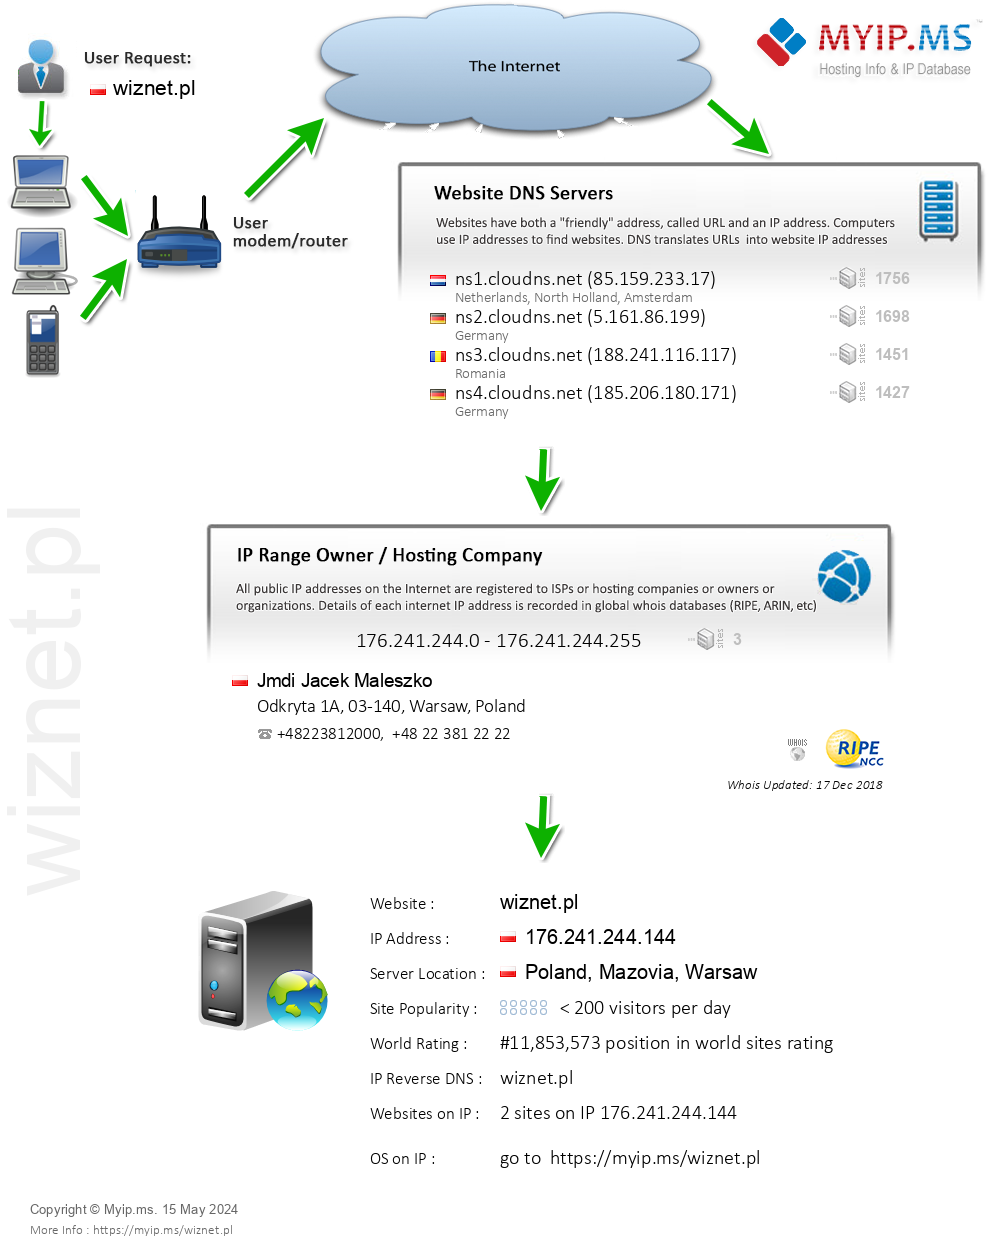 Wiznet.pl - Website Hosting Visual IP Diagram